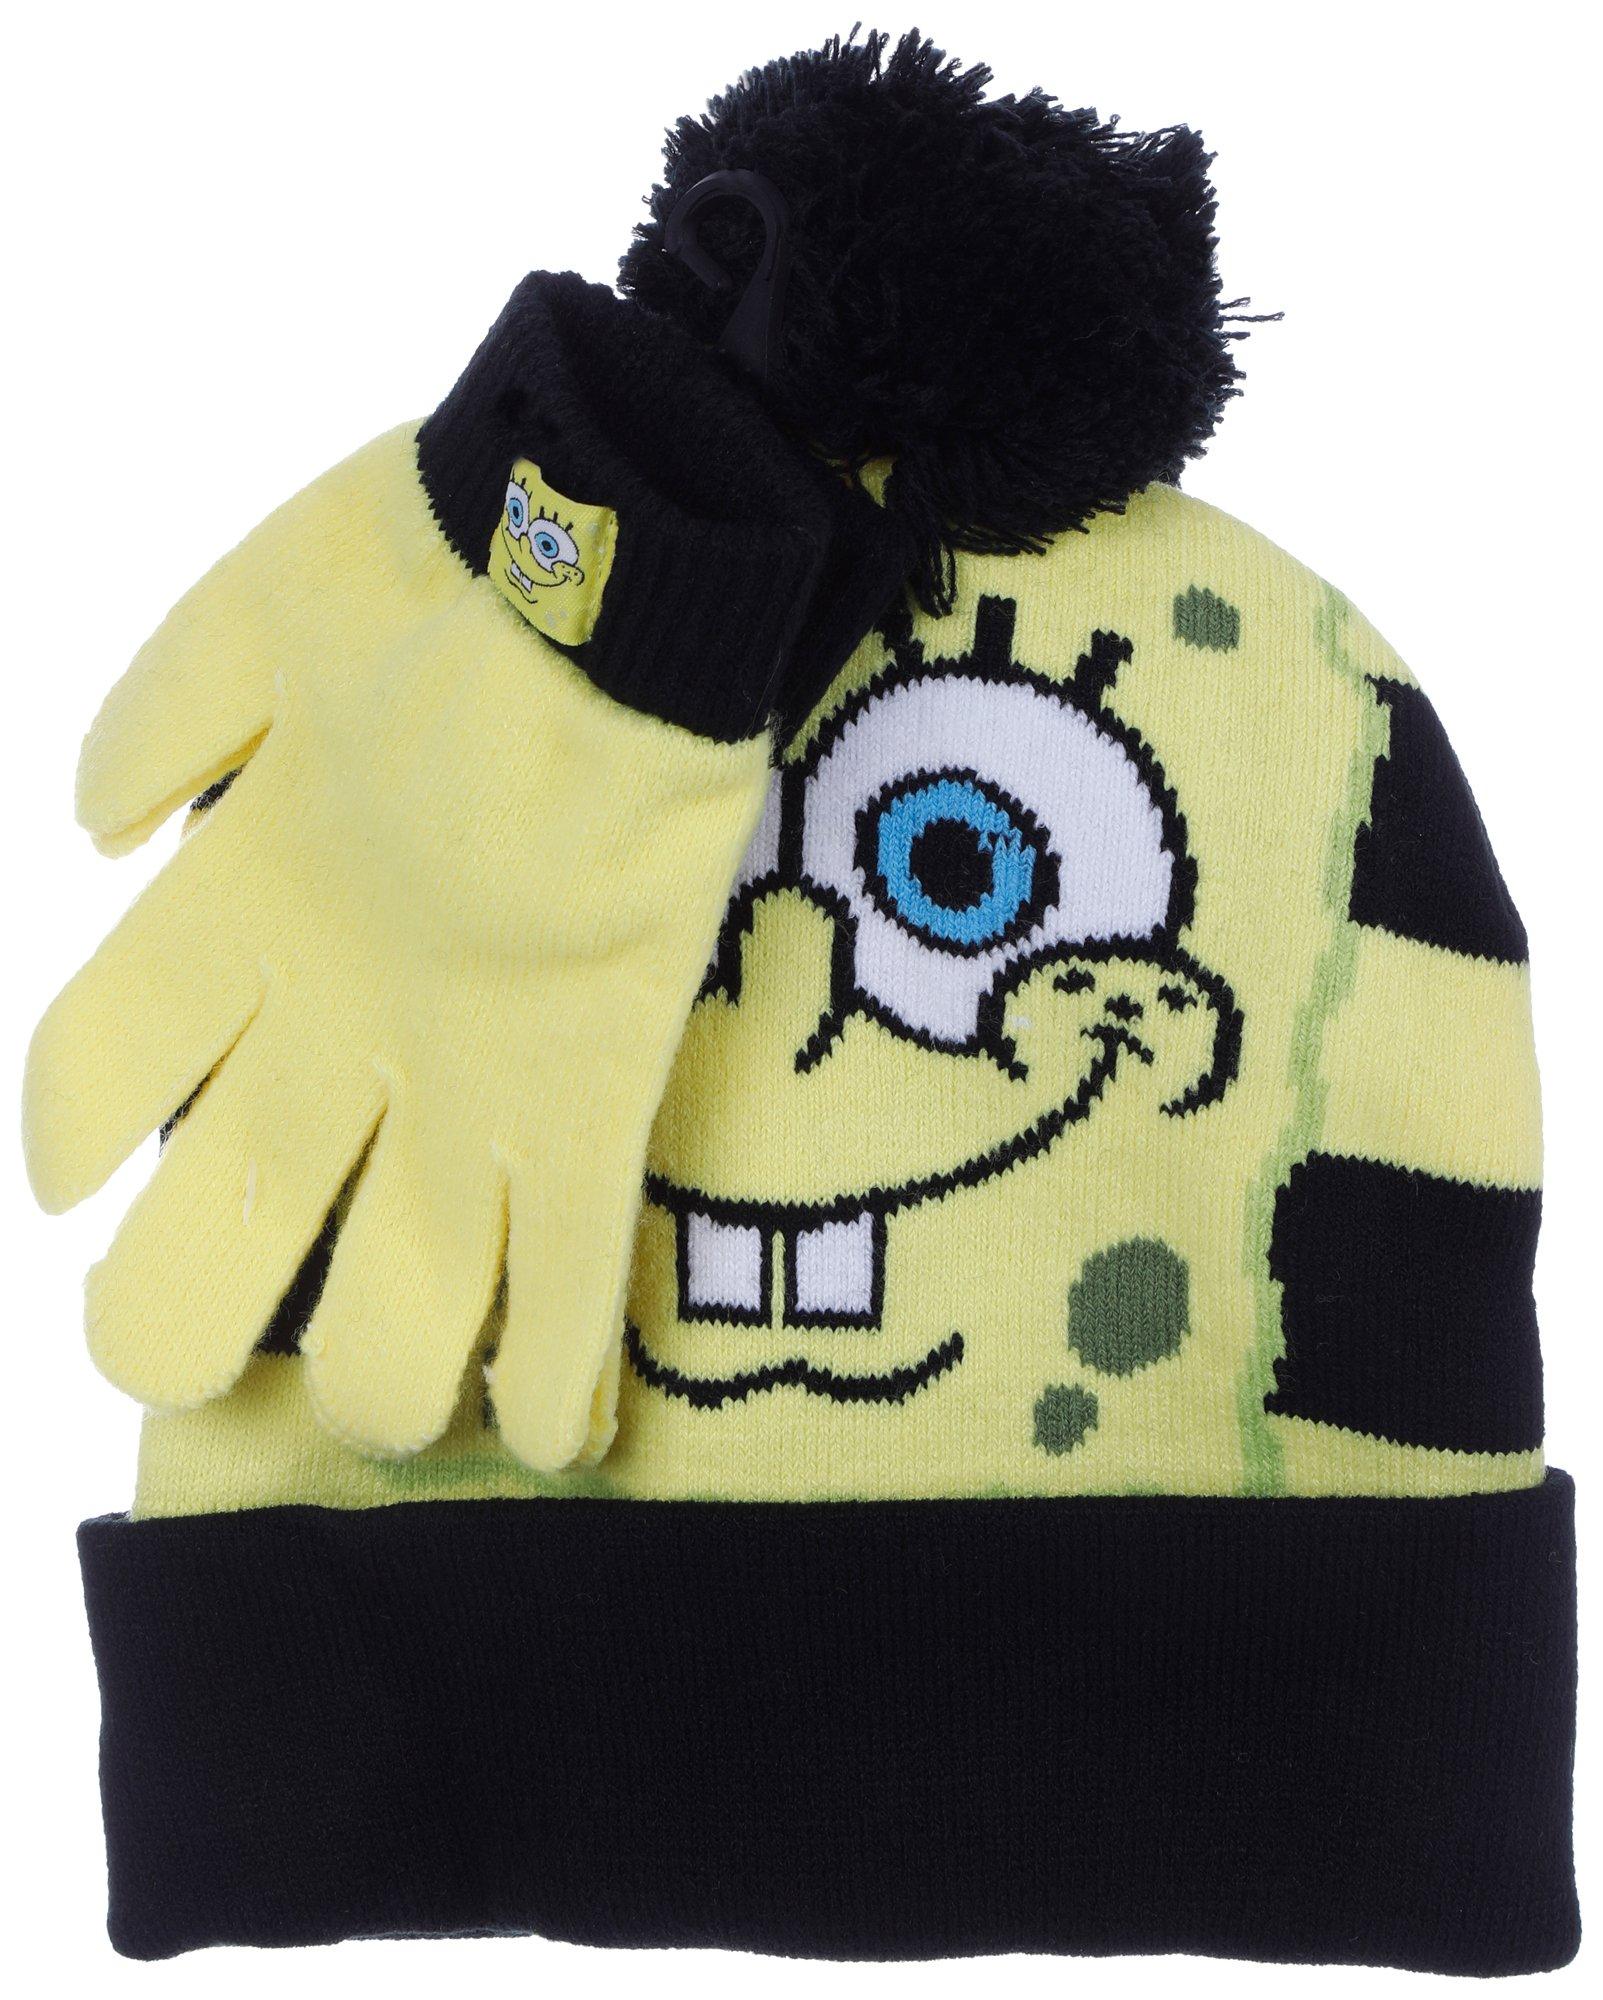 Boys Sponge Bob Hat & Gloves Set